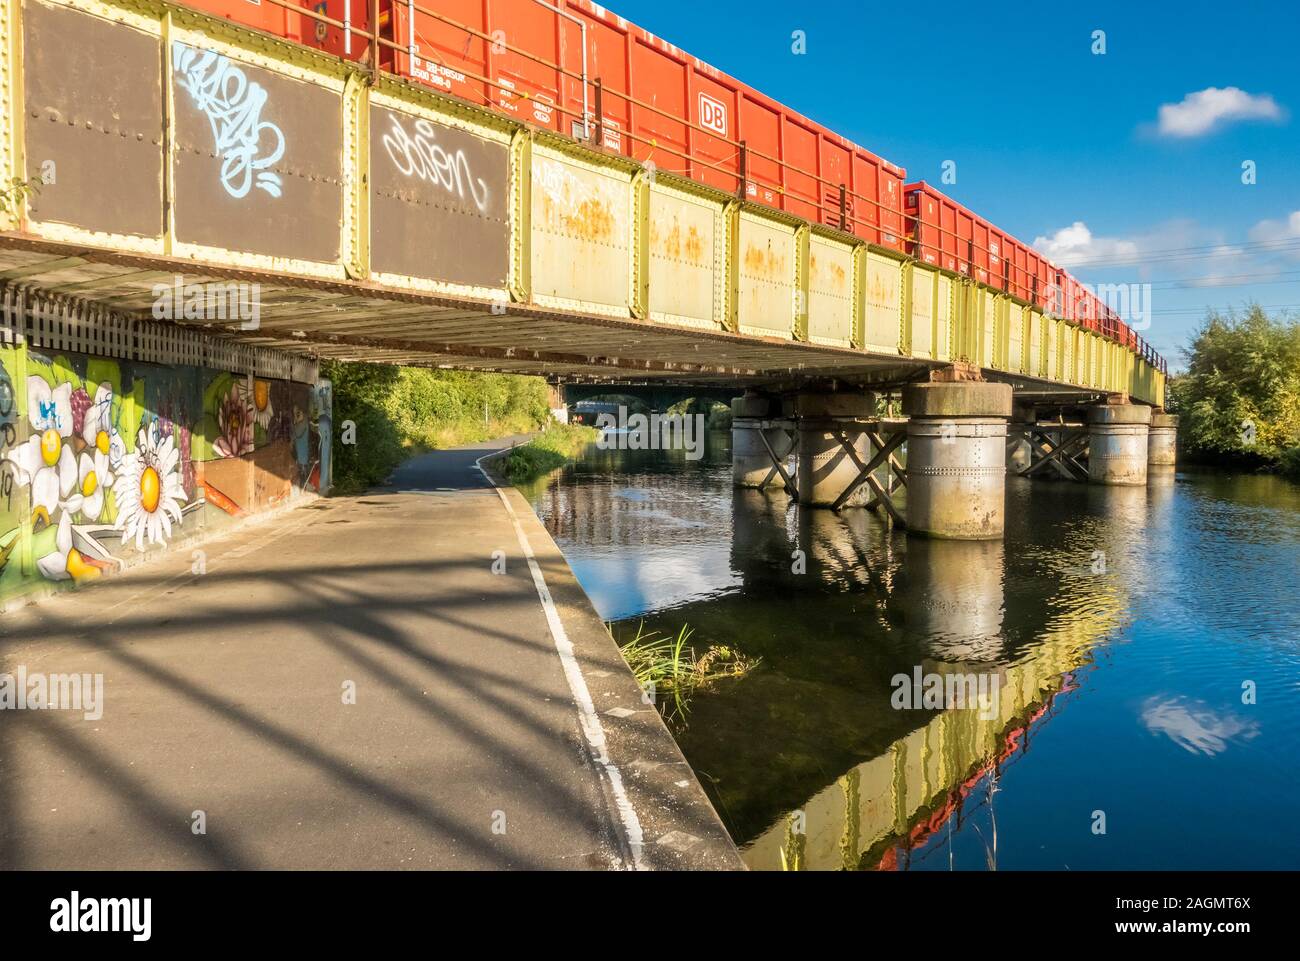 An orange goods train crossing on a green railway bridge over the RIver Nene in central Peterborough, Cambridgeshire, England Stock Photo